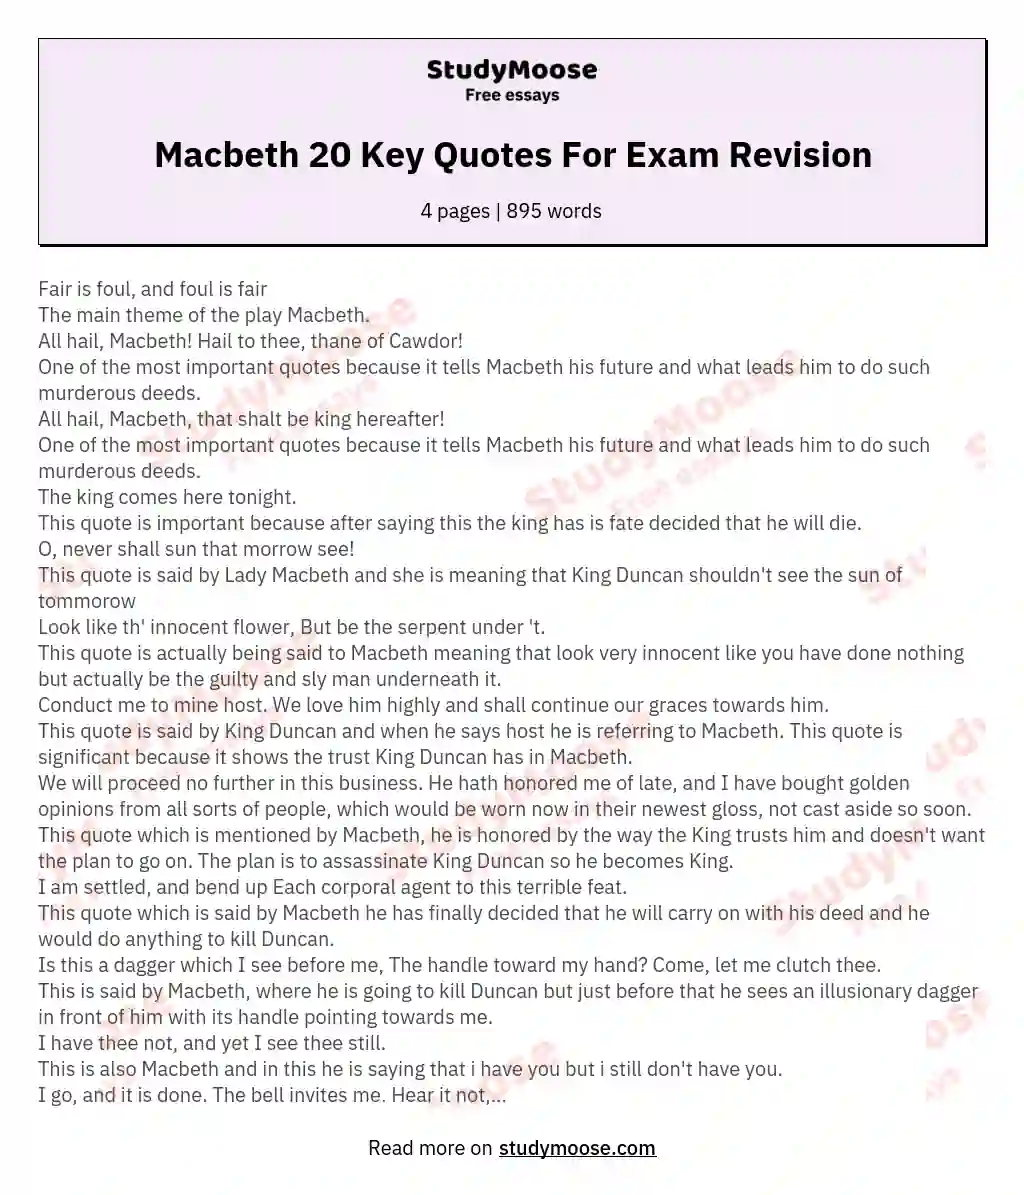 Macbeth 20 Key Quotes For Exam Revision